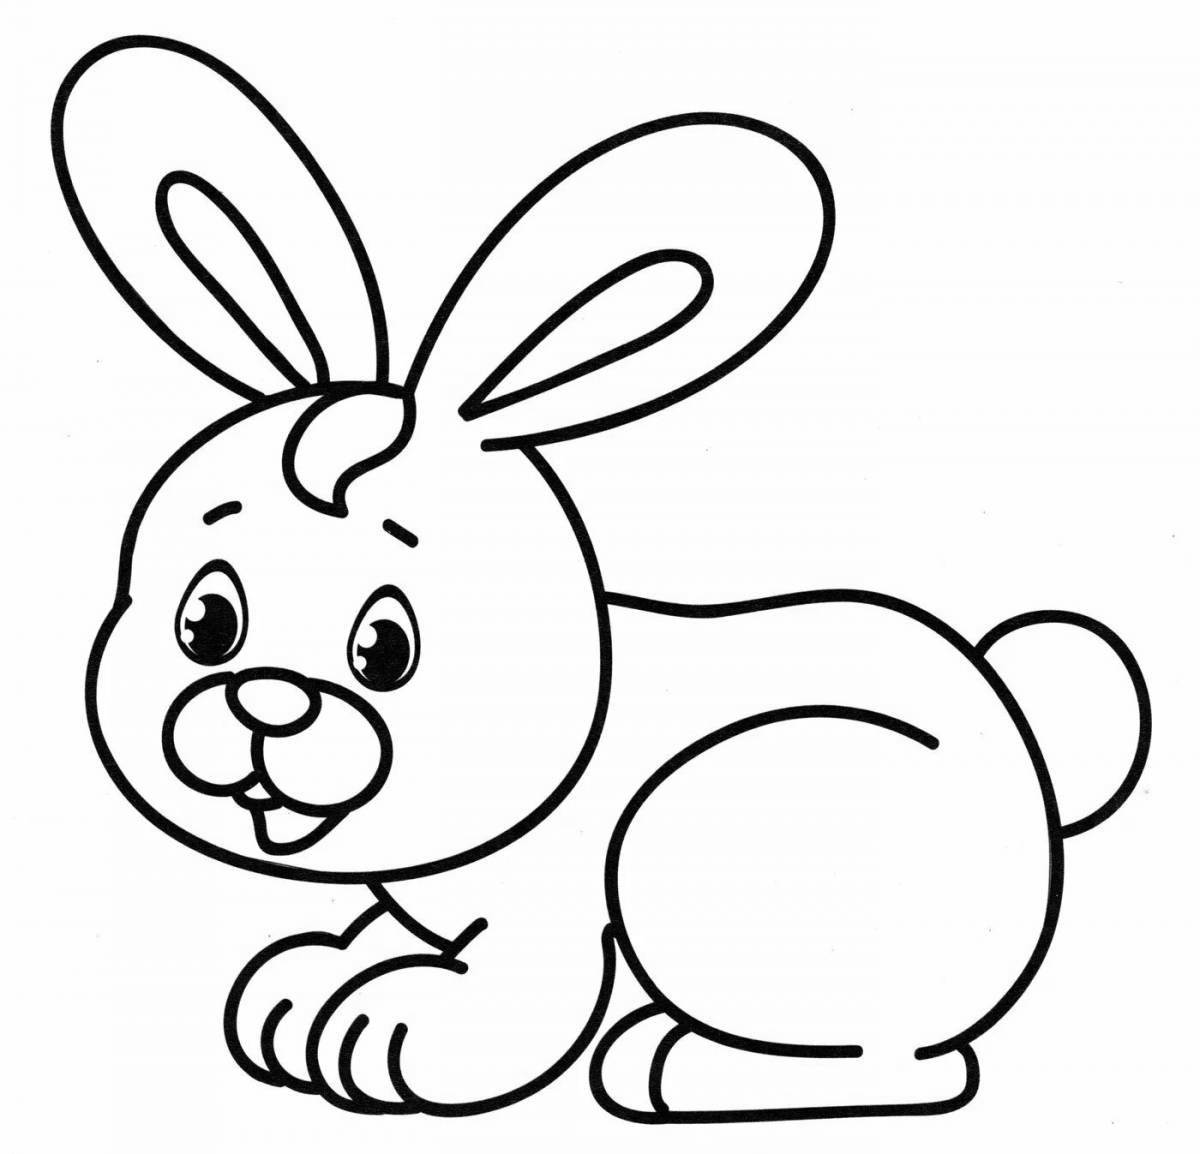 Cute bunny coloring printable